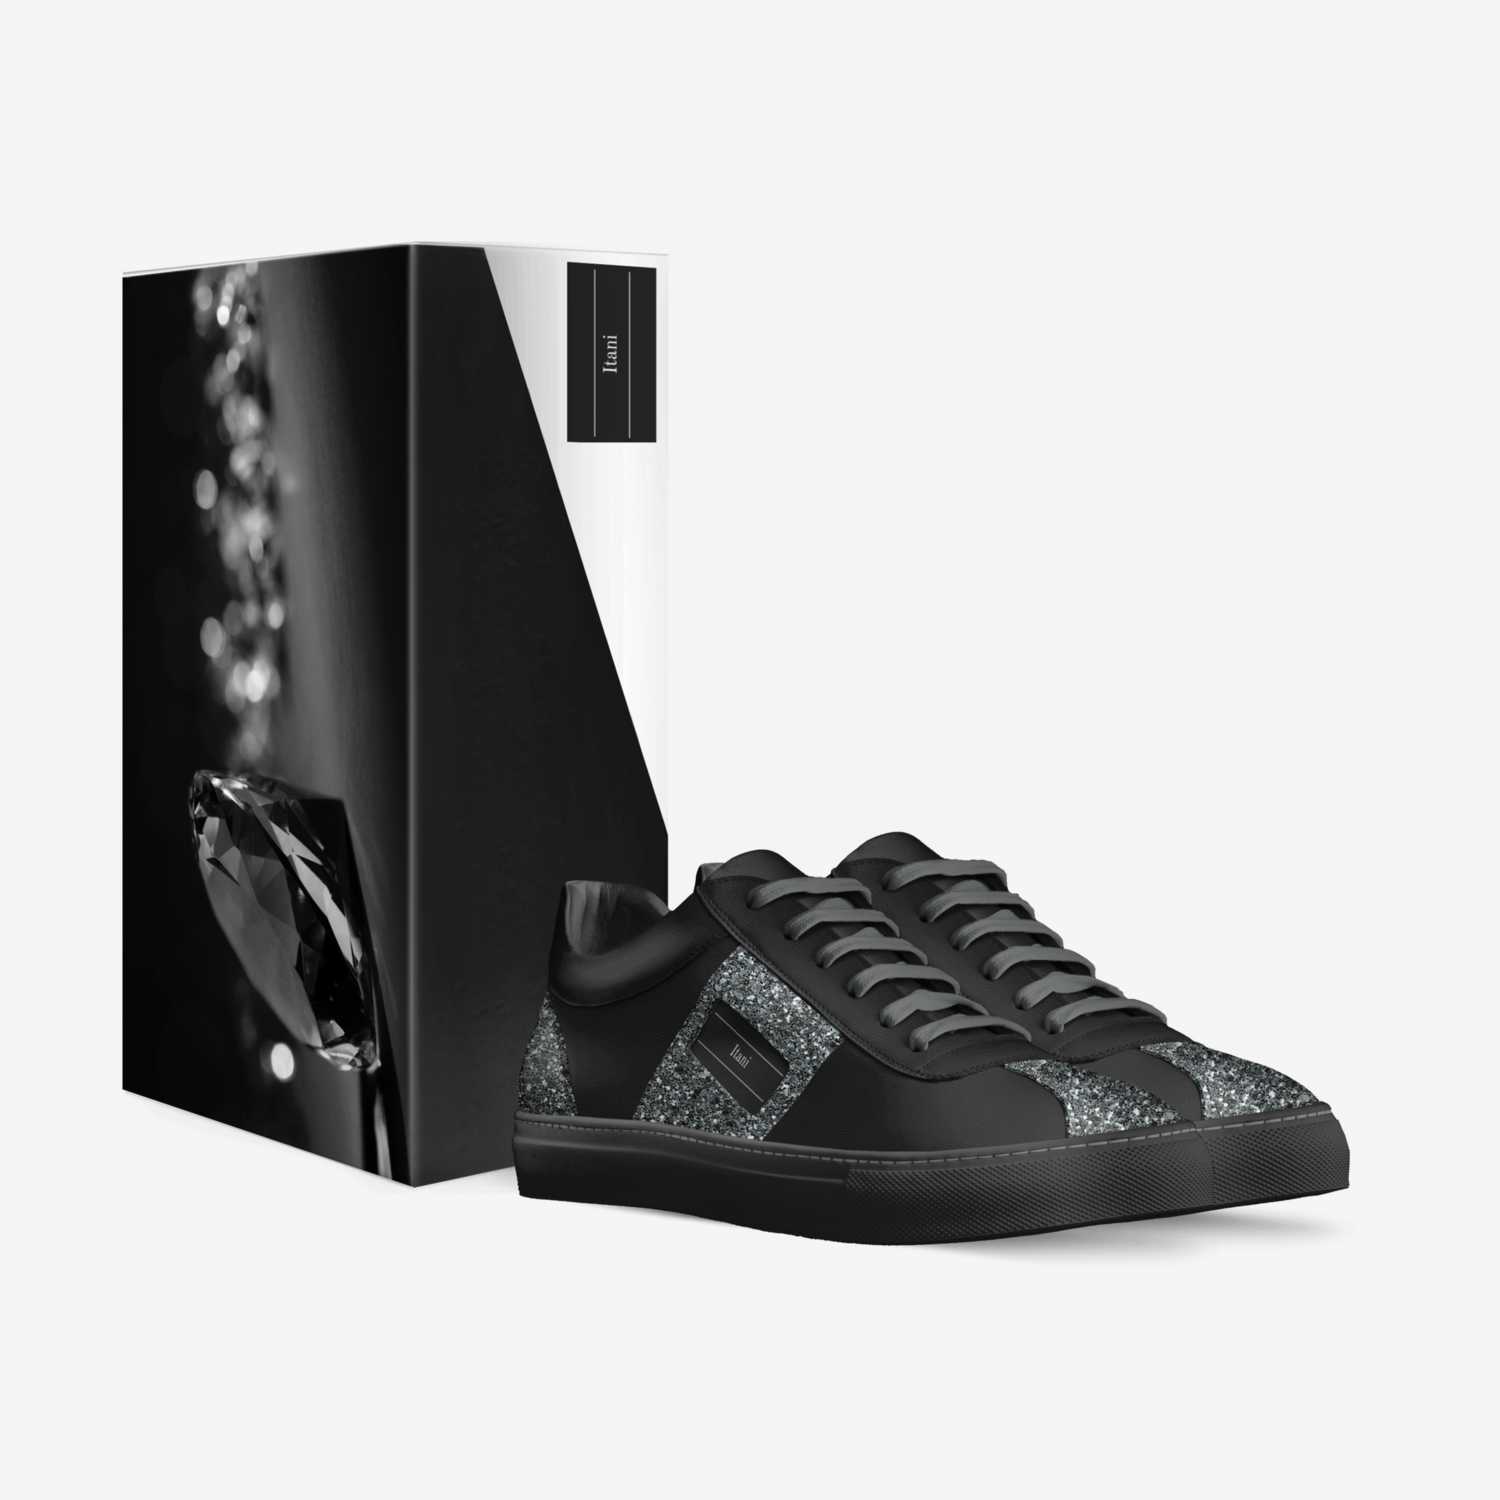 Itani custom made in Italy shoes by Amanda J. Itani | Box view